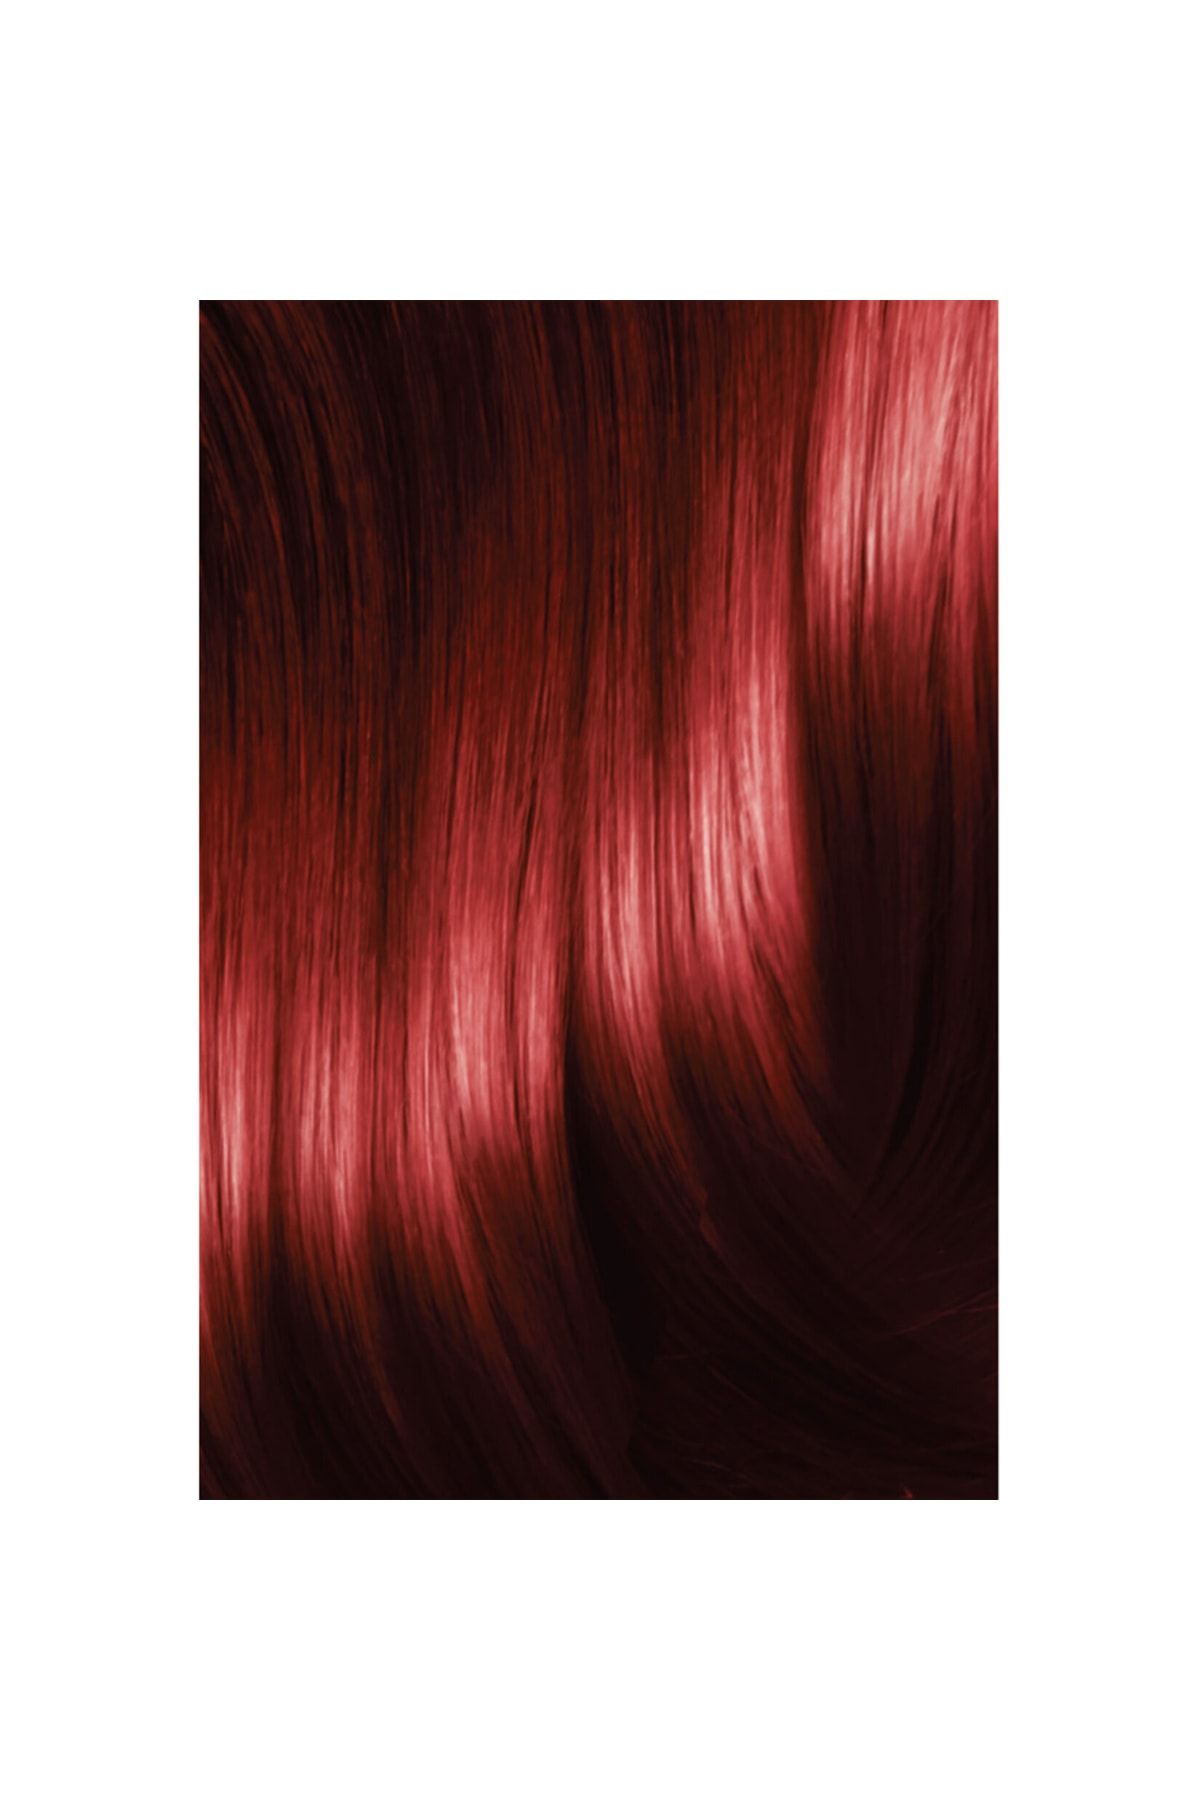 NATURABALANCE Nb Organik Saç Boyası No:4.66 Yoğun Kızıl